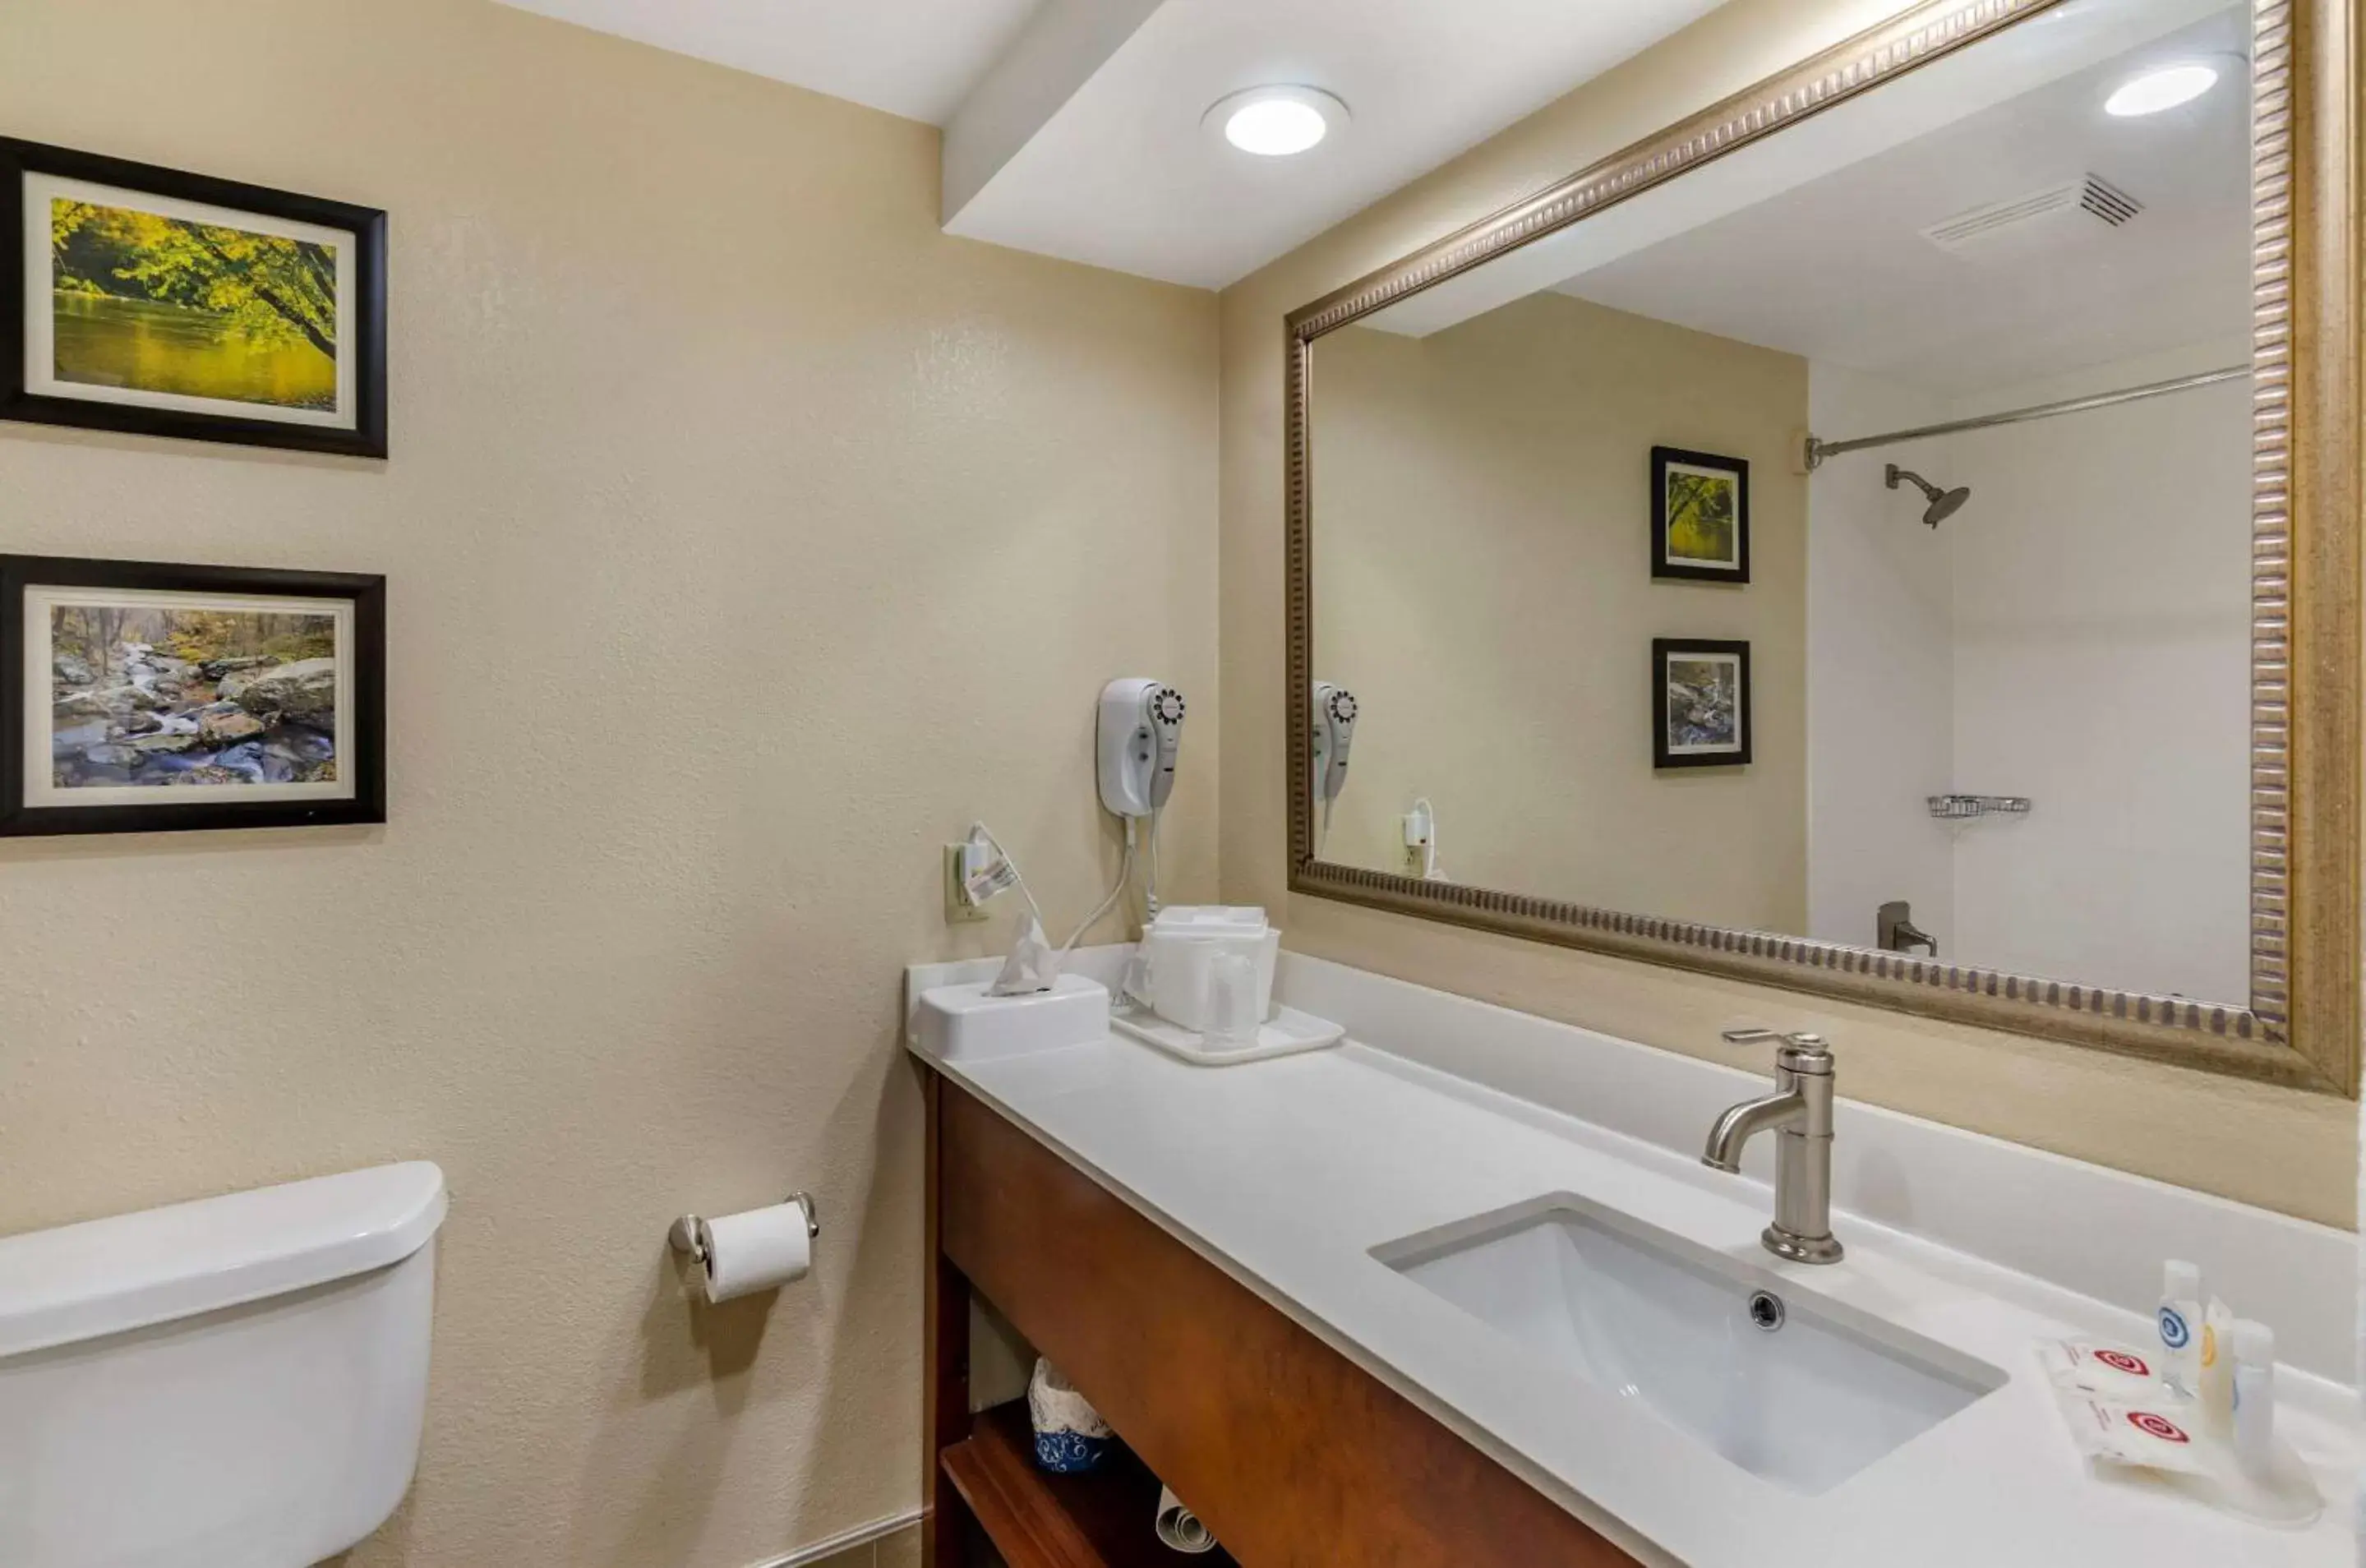 Photo of the whole room, Bathroom in Comfort Inn Waynesboro